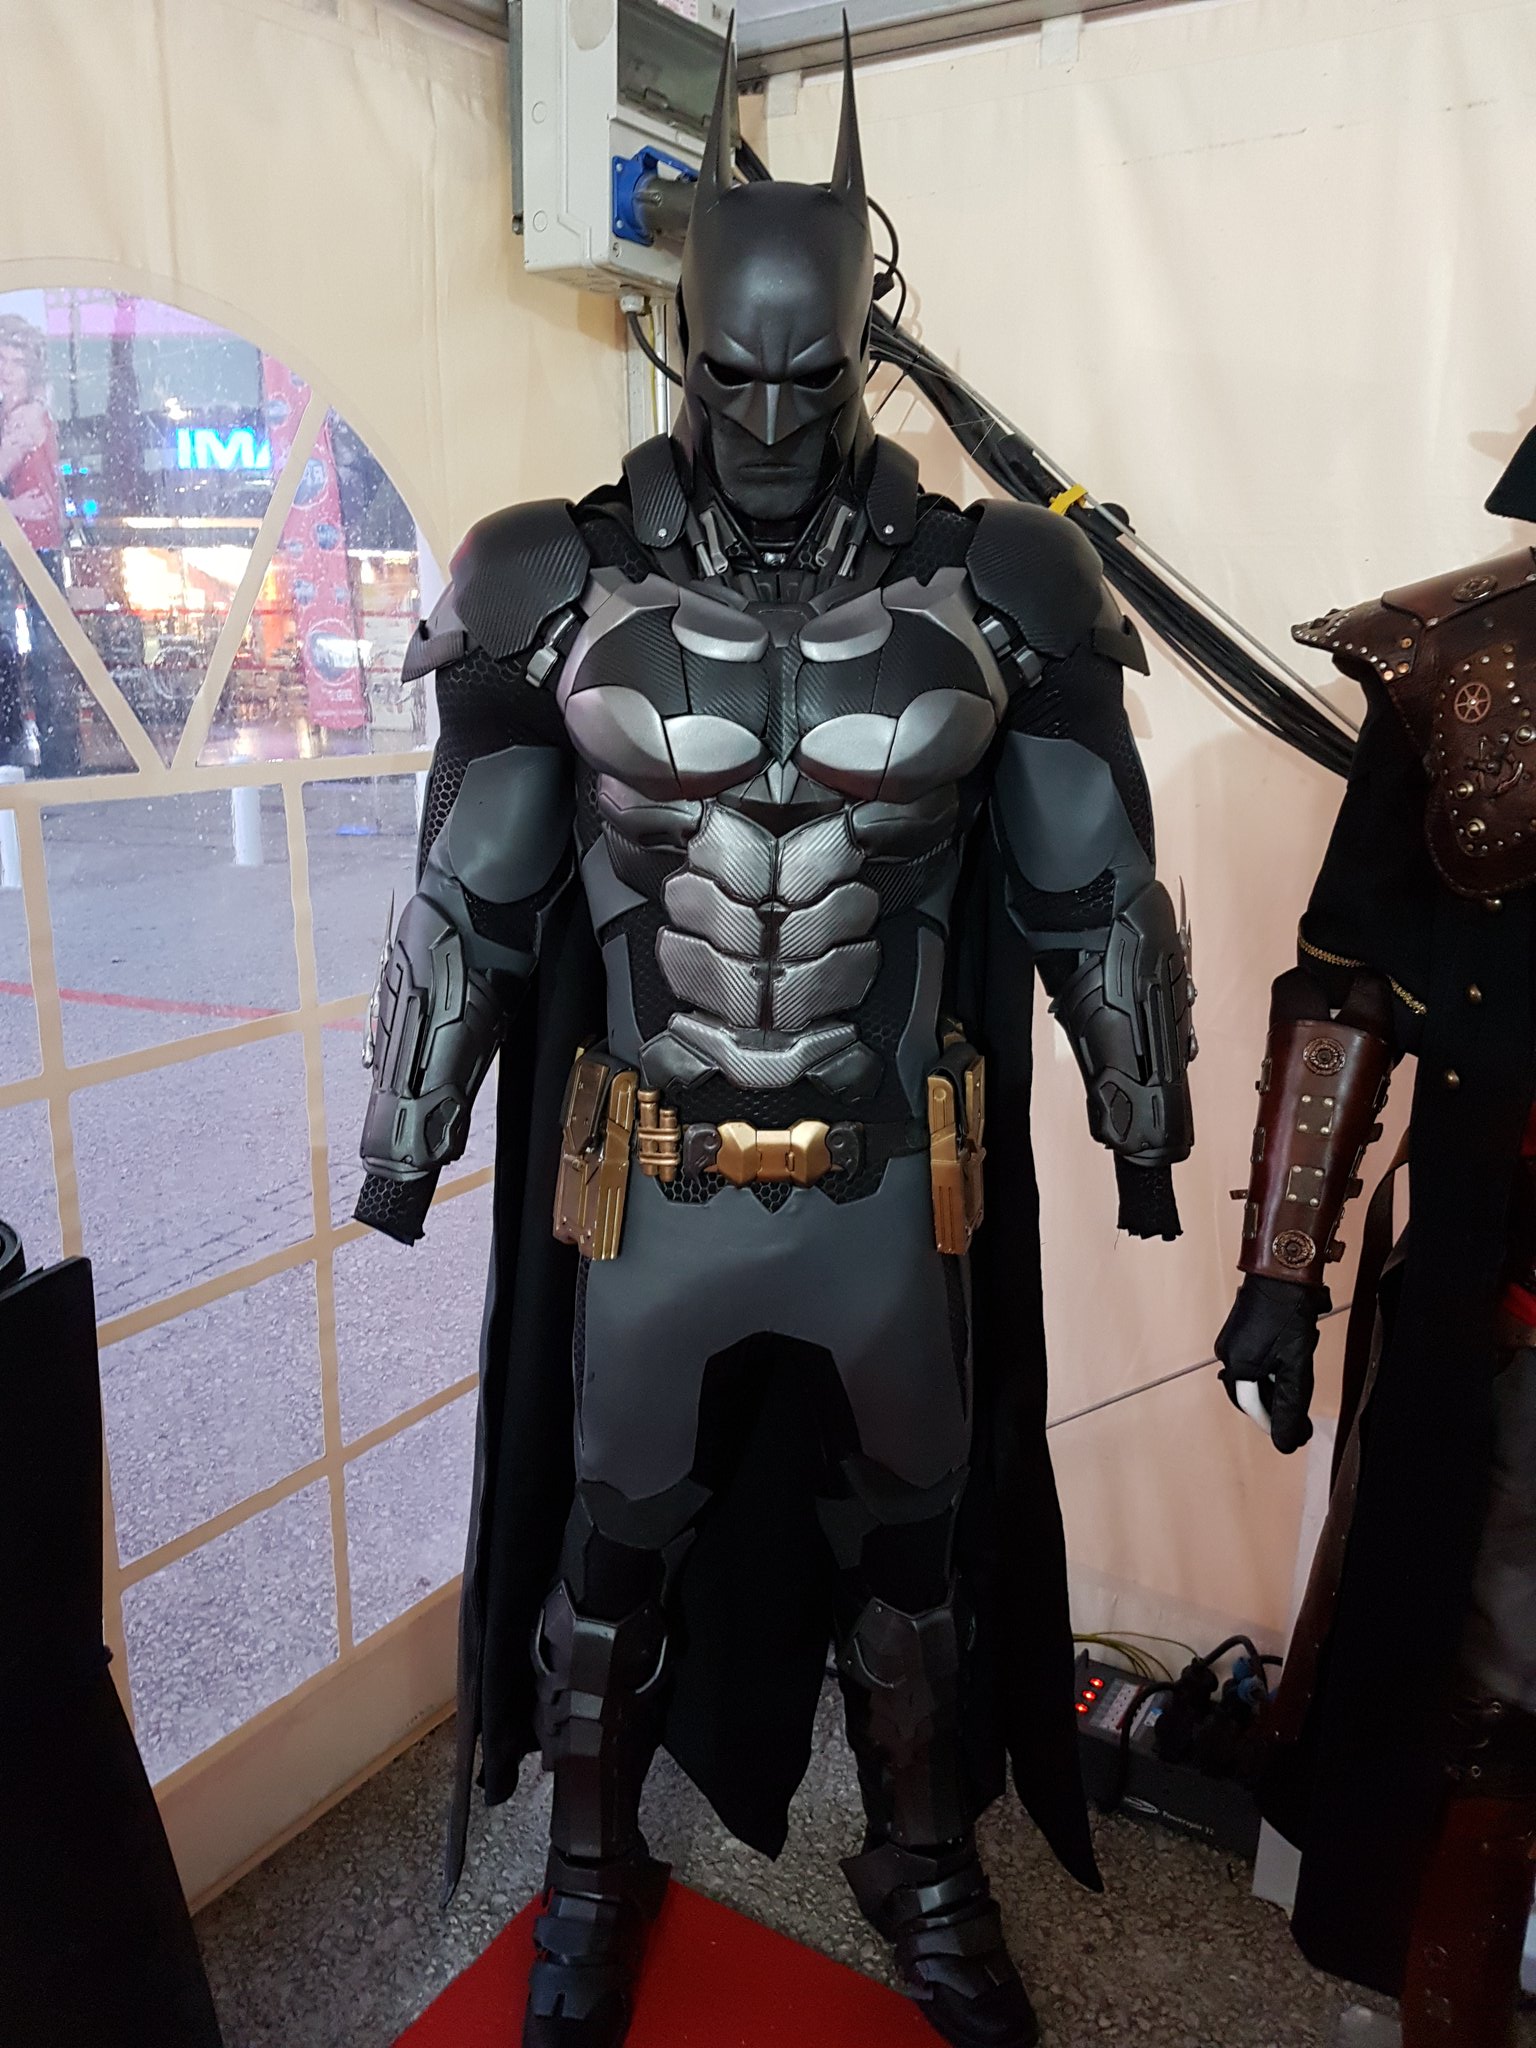 Earn fleet Orderly Rocksteady Studios on Twitter: "This is an EXCEPTIONAL Batman: Arkham  Knight cosplay. Well done! https://t.co/fRTIJXUedf" / Twitter